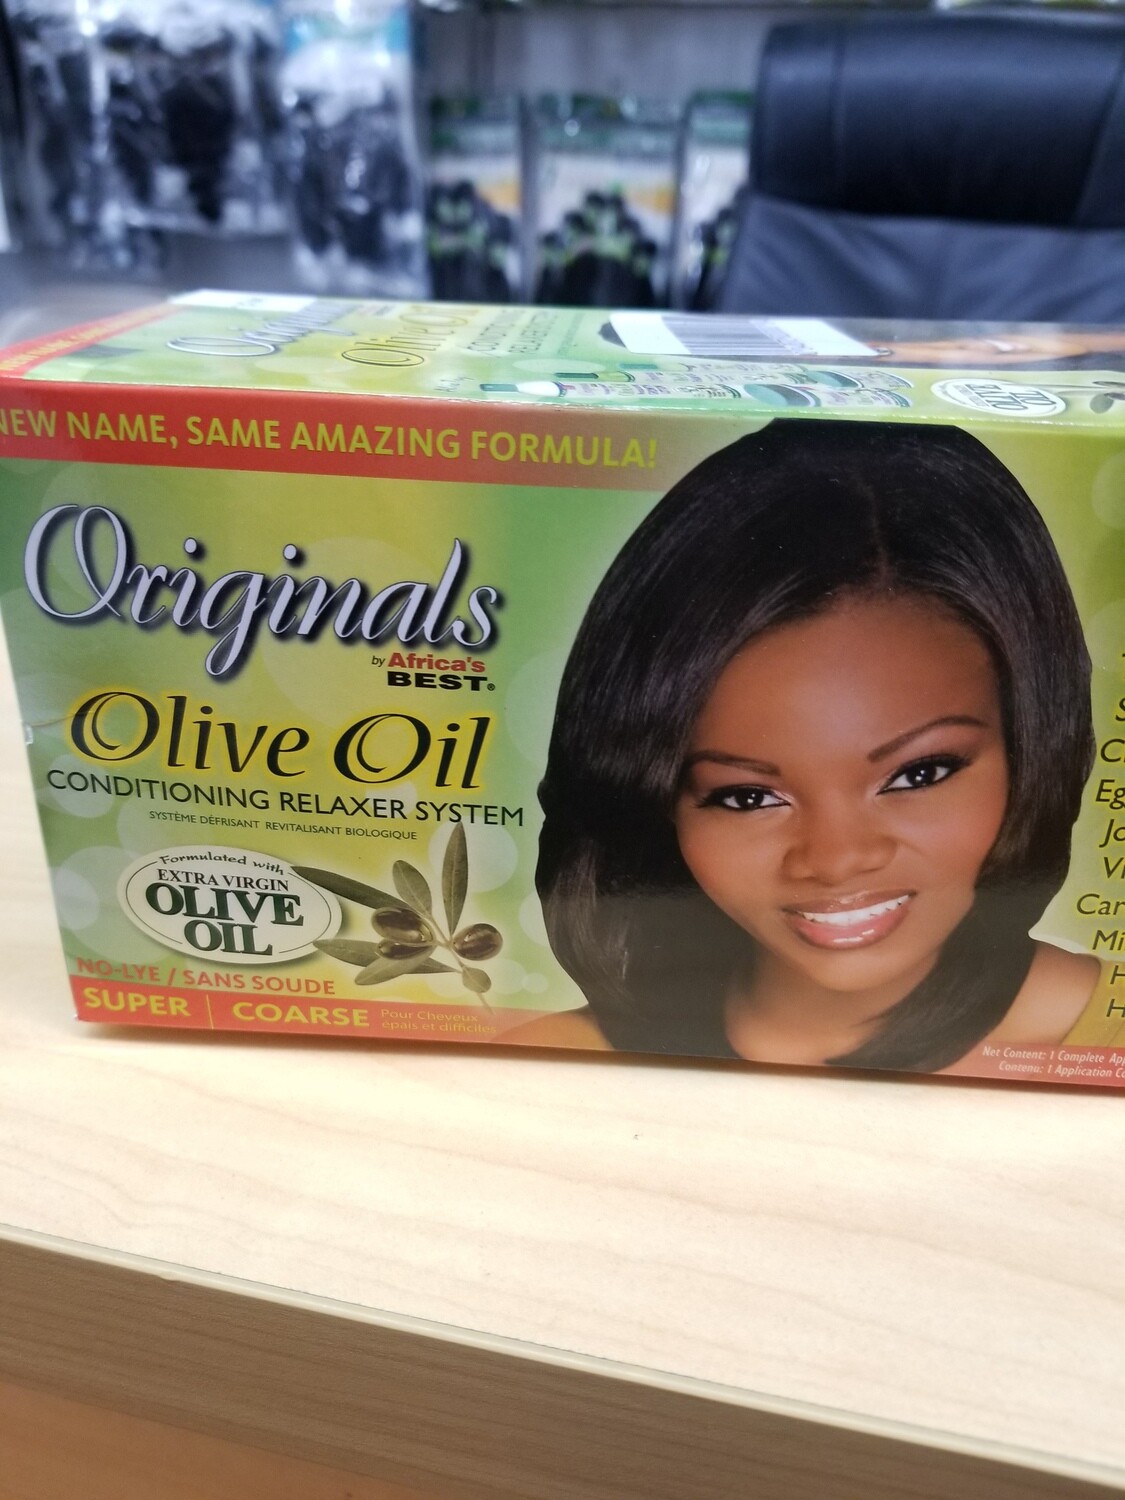 Originals Africa's Olive Oil Super Relaxer